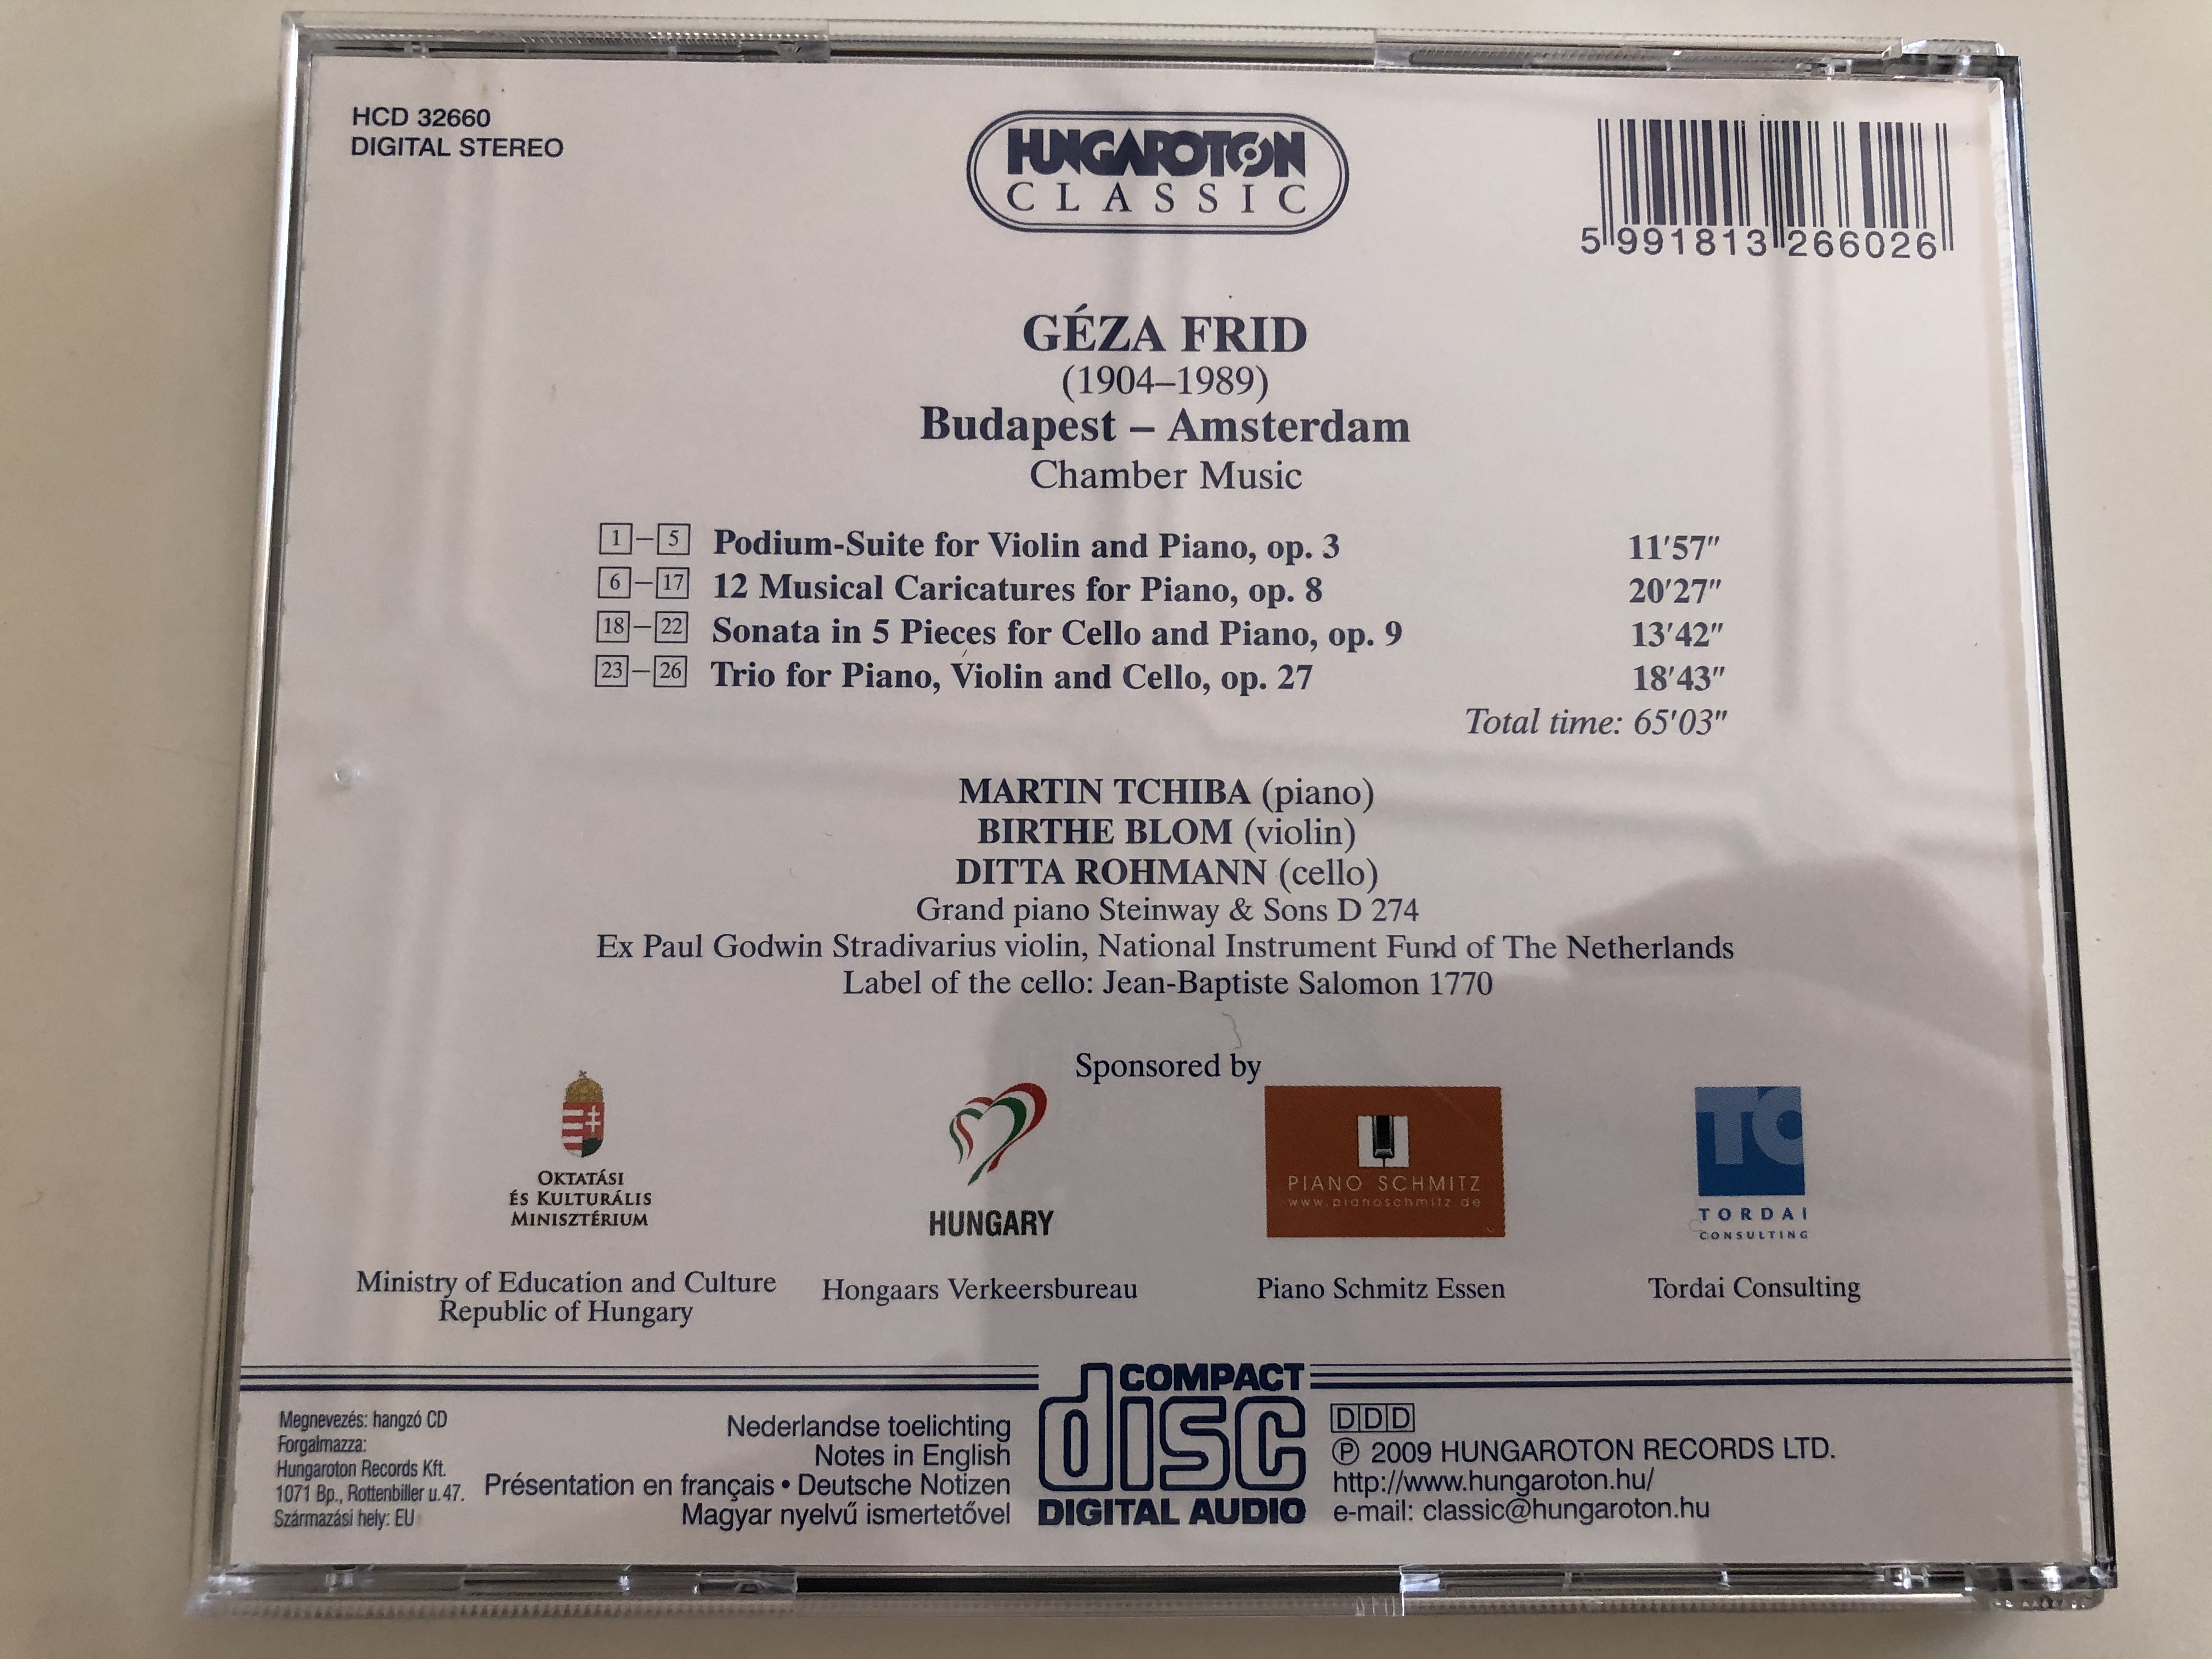 g-za-frid-budapest-amsterdam-chamber-music-martin-tchiba-piano-birthe-blom-violin-ditta-rohmann-cello-hungaroton-classic-audio-cd-2009-stereo-hcd-32660-8-.jpg